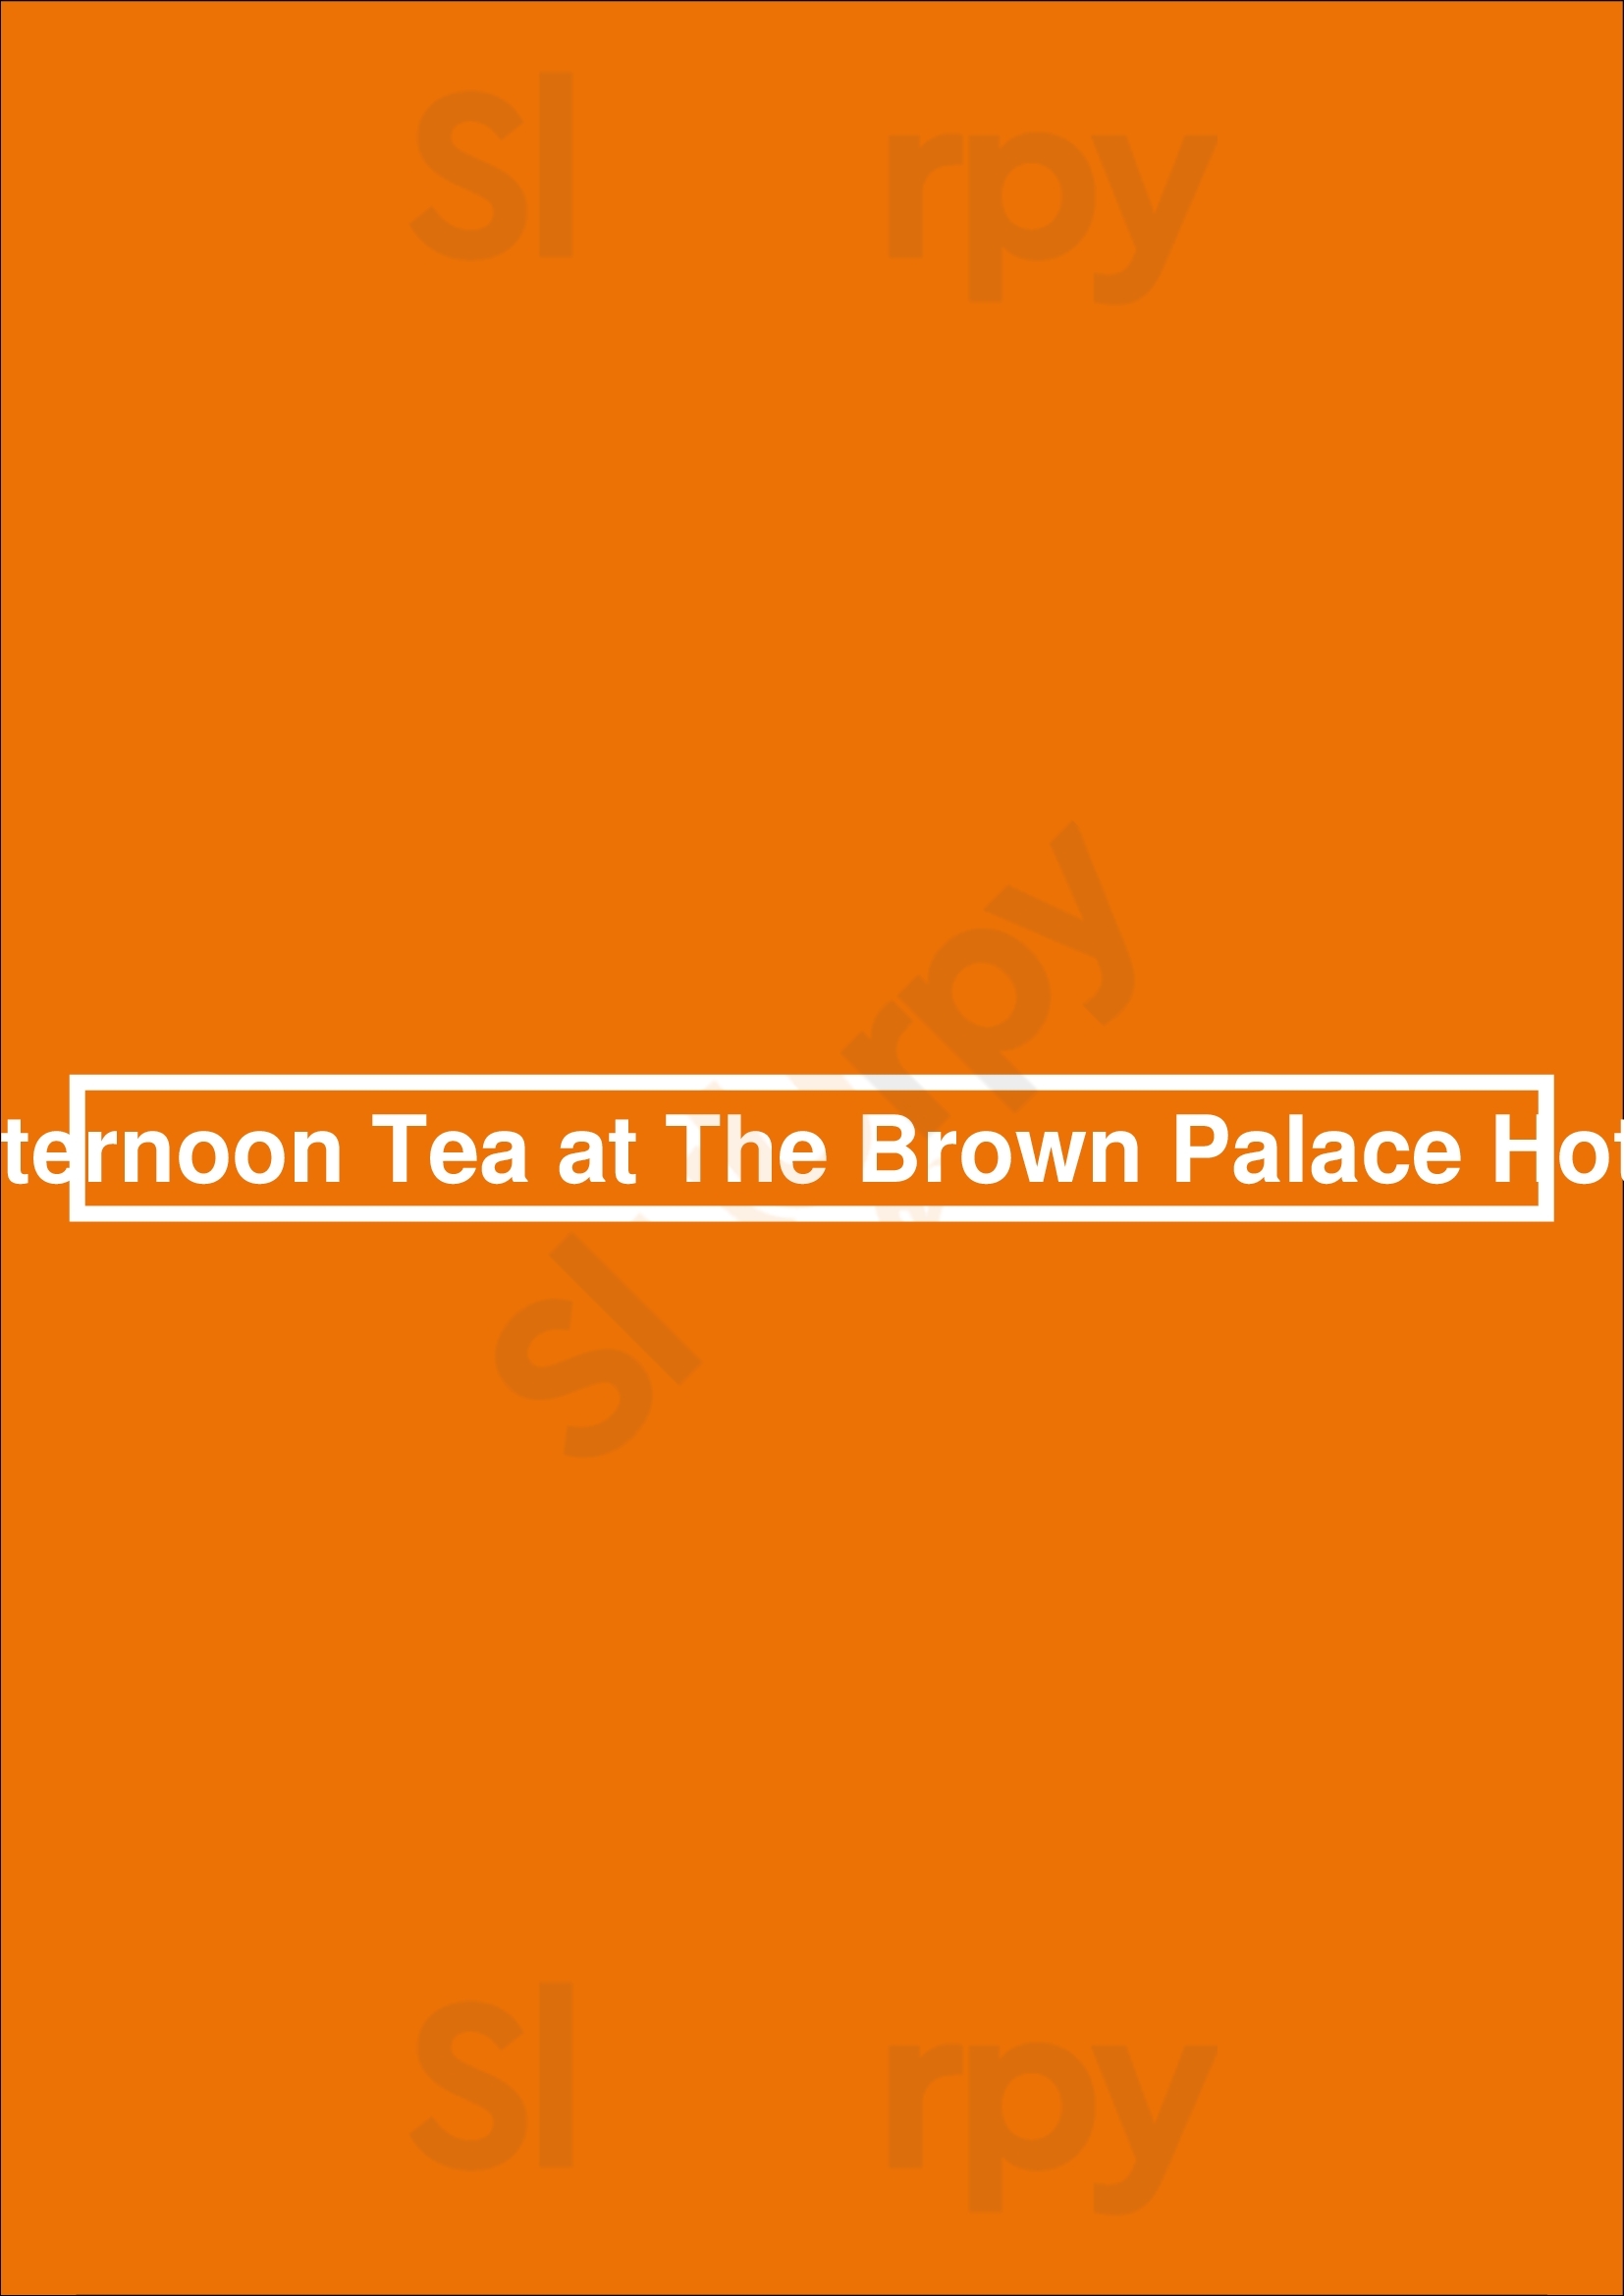 Afternoon Tea At The Brown Palace Hotel Denver Menu - 1